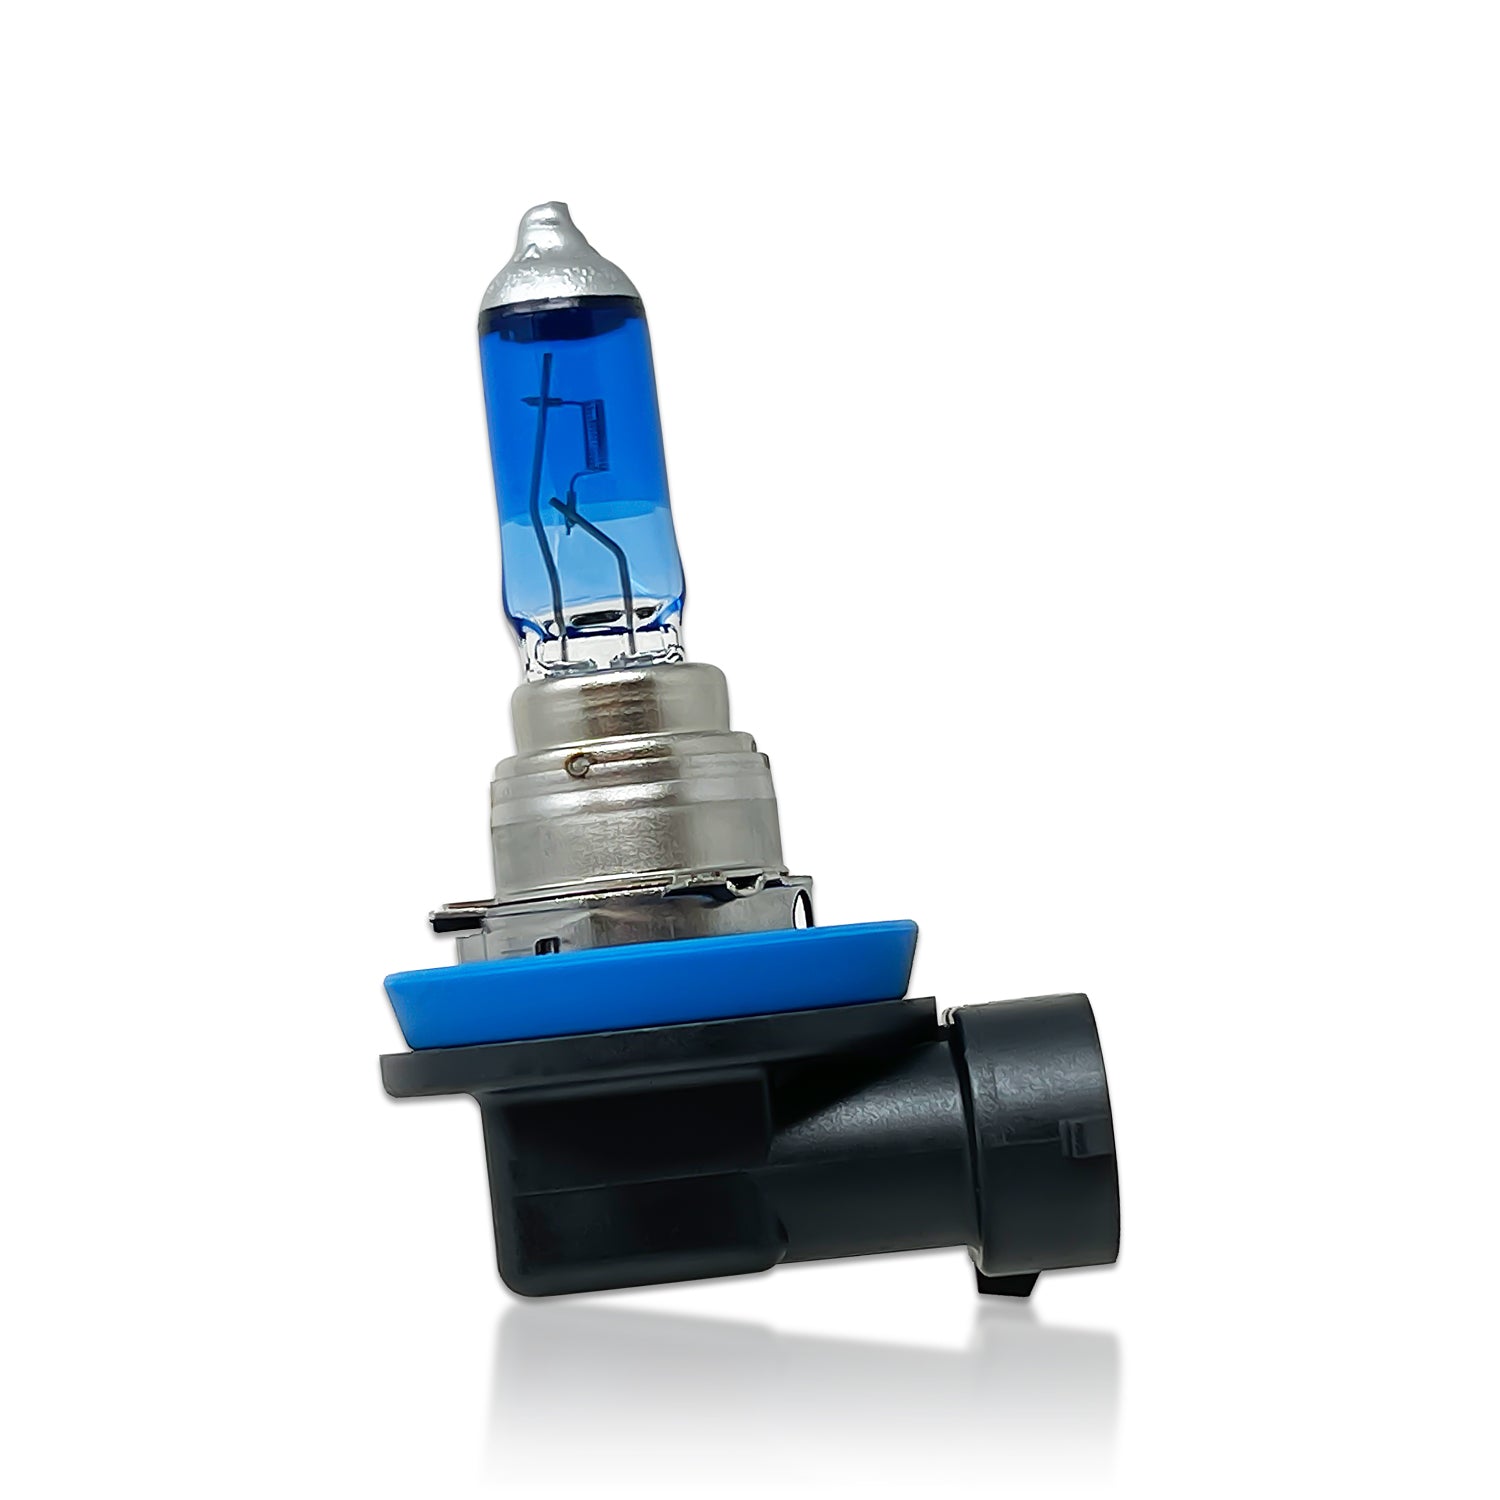 H7: Osram 5000K Cool Blue Boost Halogen Bulb 62210CBB (Pack of 2)